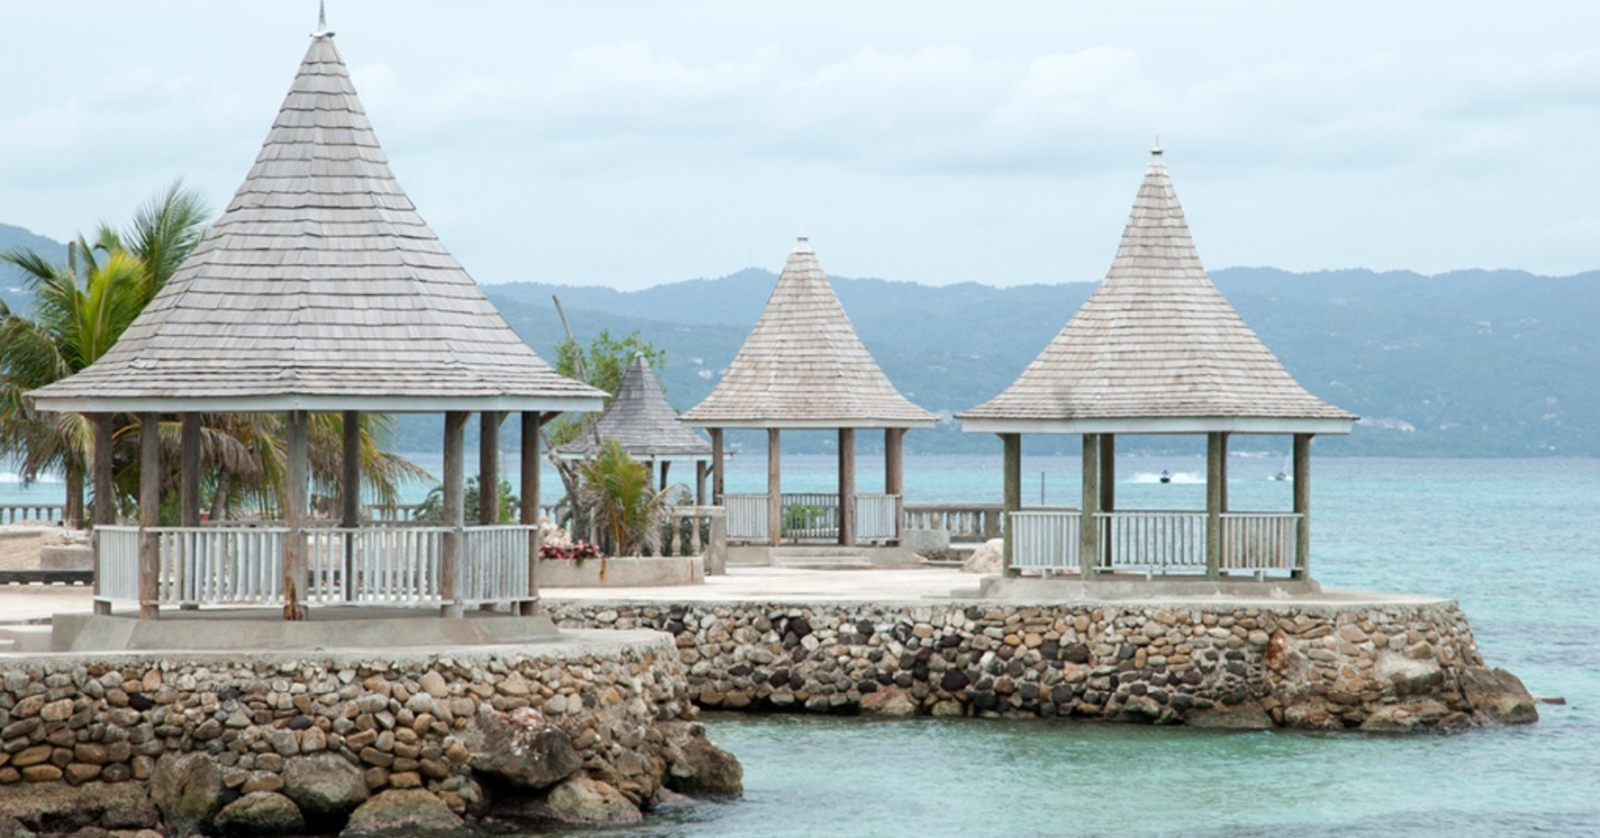 SeaGarden Beach Resort in Jamaica - several light grey gazebos on the waters edge